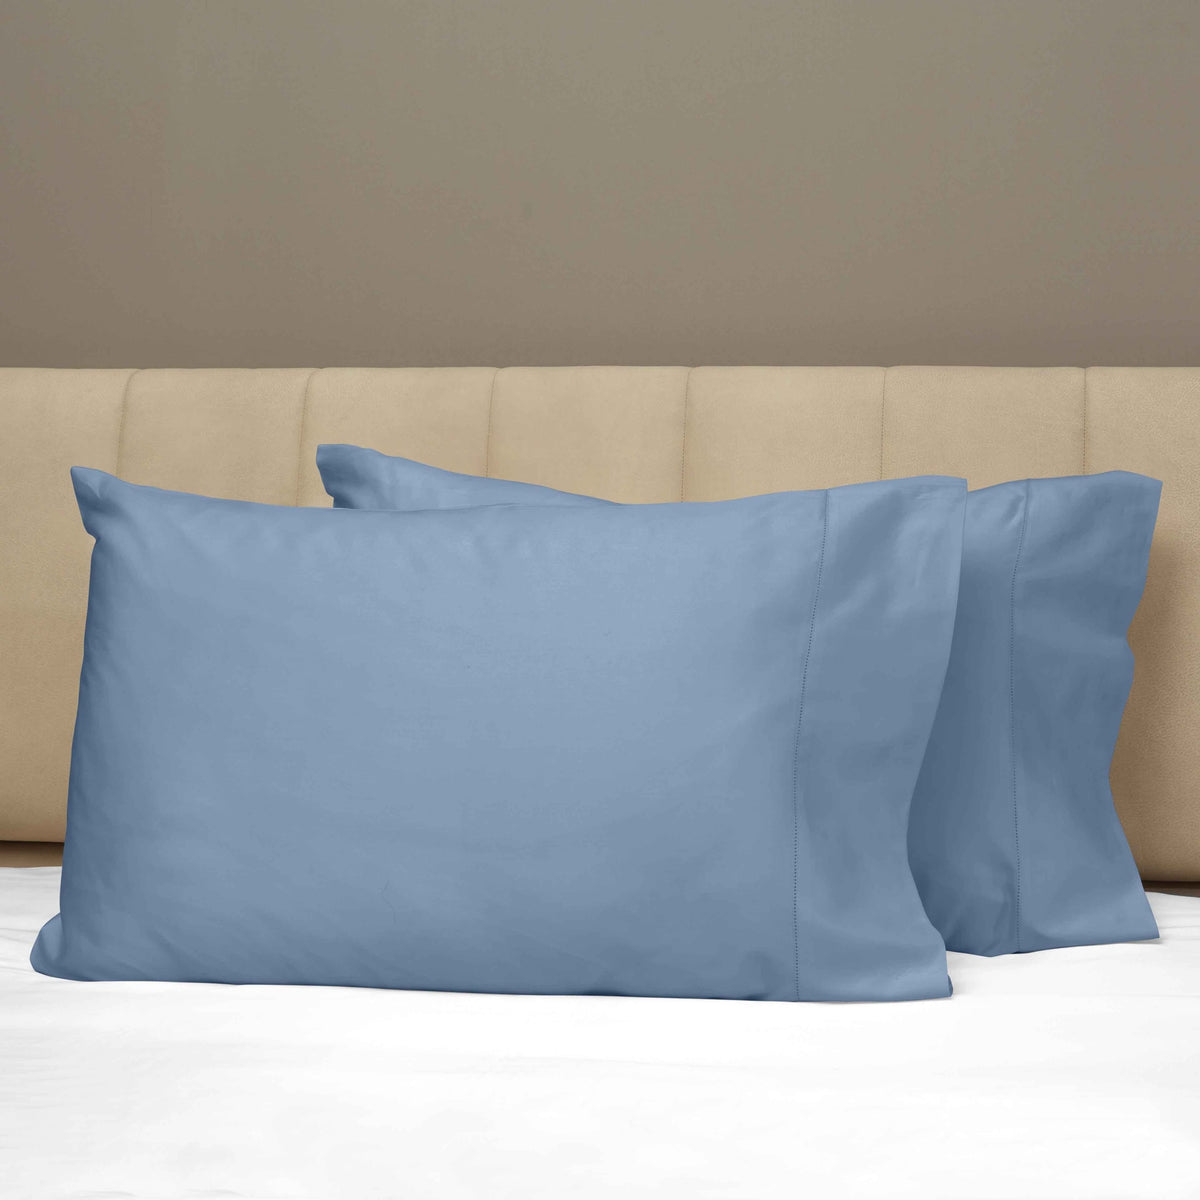 Closeup View of Signoria Raffaello Pillowcases in Air Force Blue Color